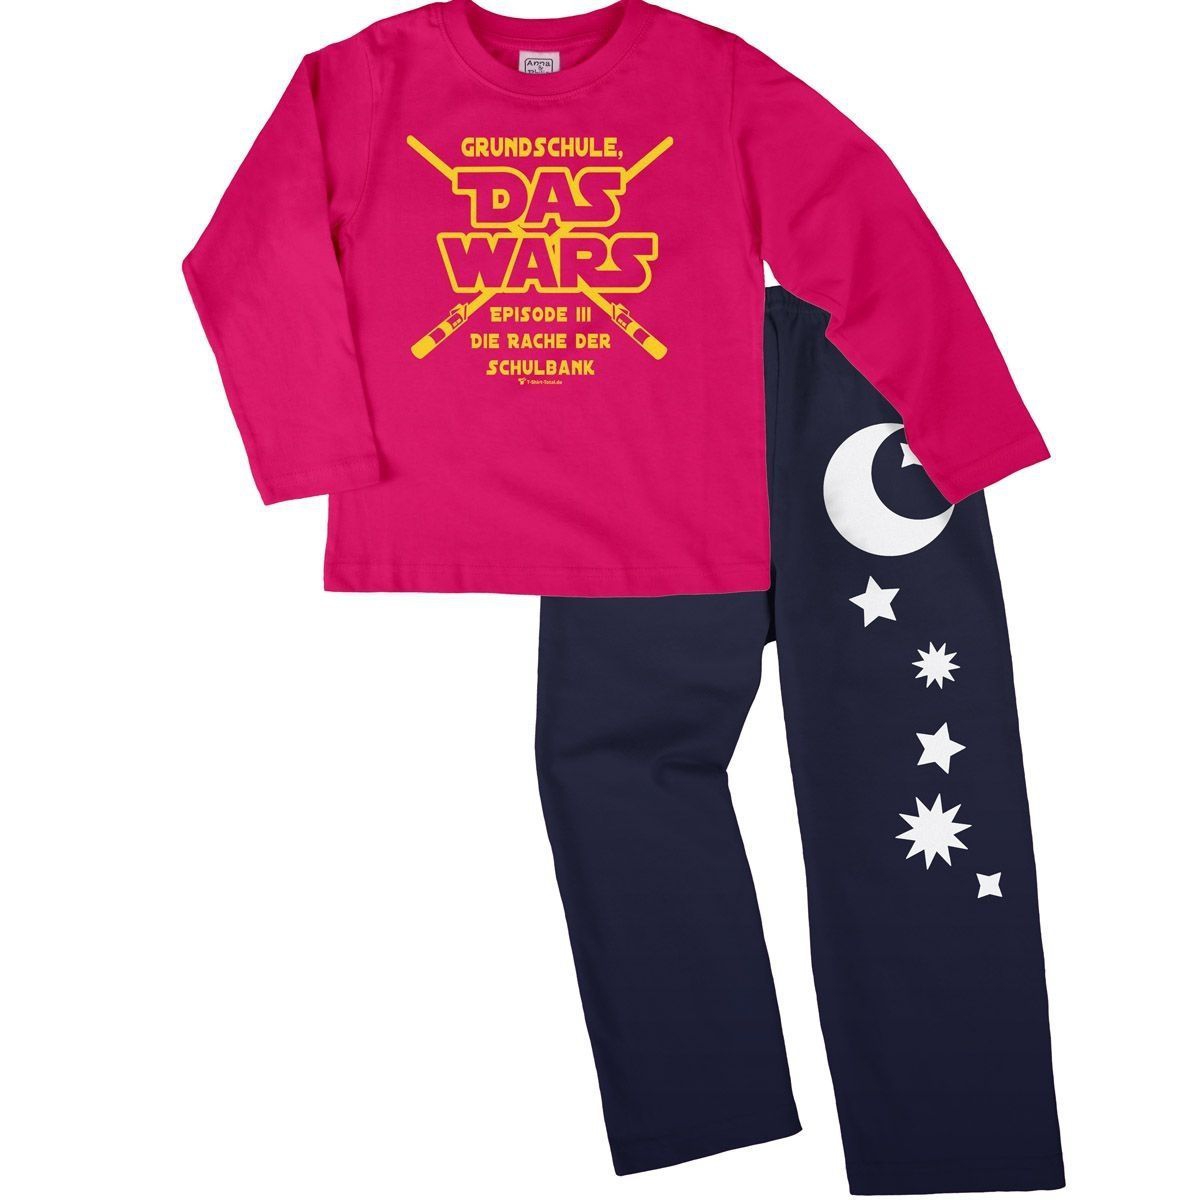 Das wars Grundschule Pyjama Set pink / navy 134 / 140